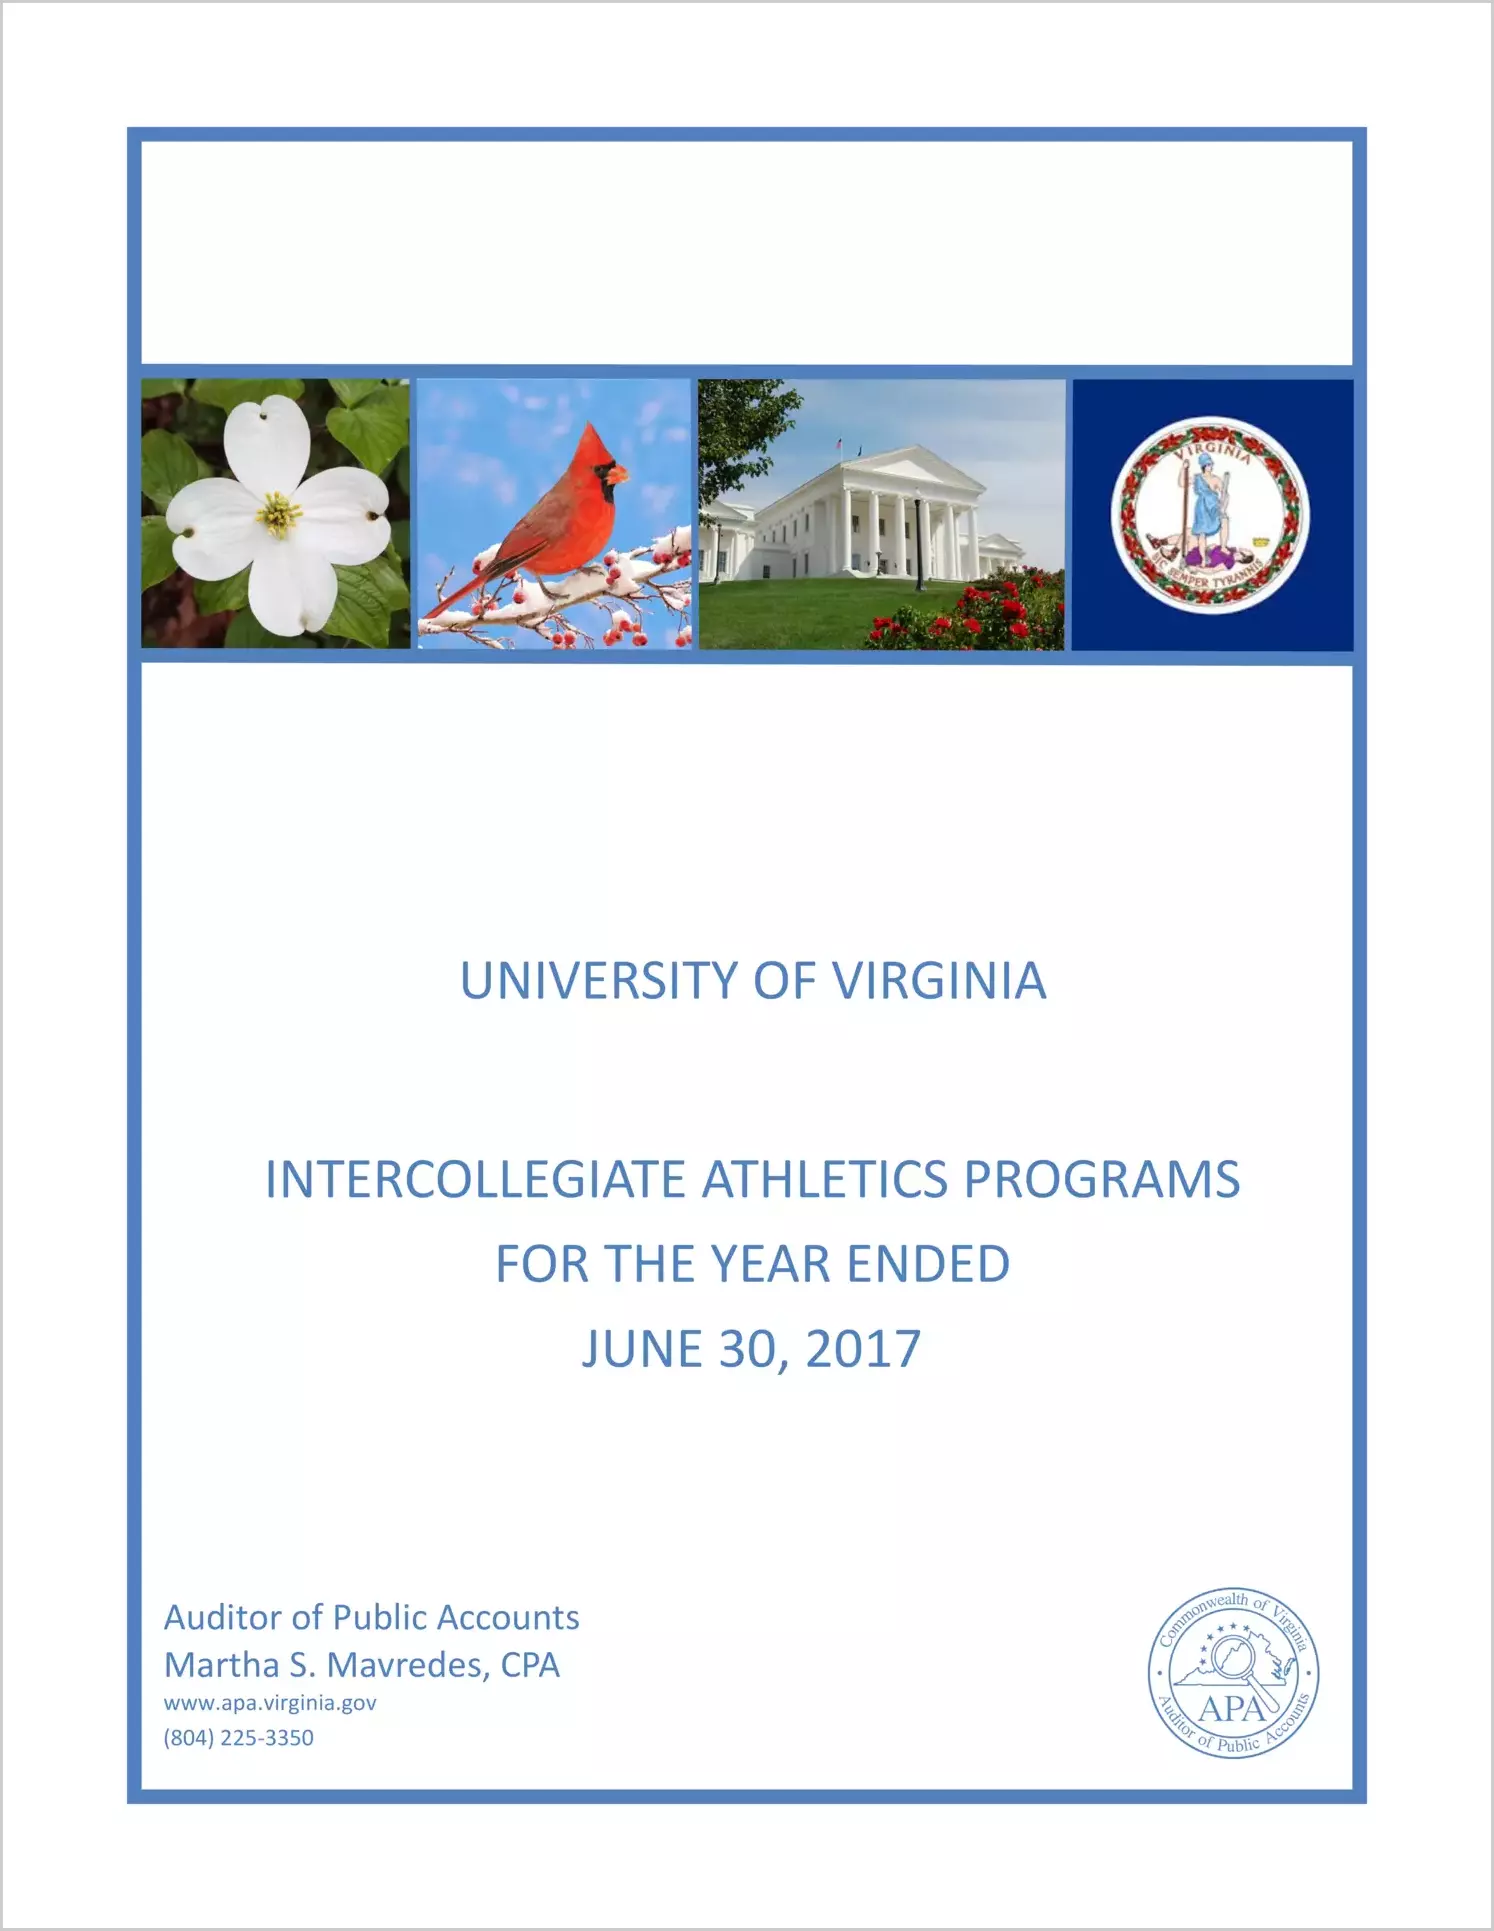 University of Virginia Intercollegiate Athletics Programs for the year ended June 30, 2017